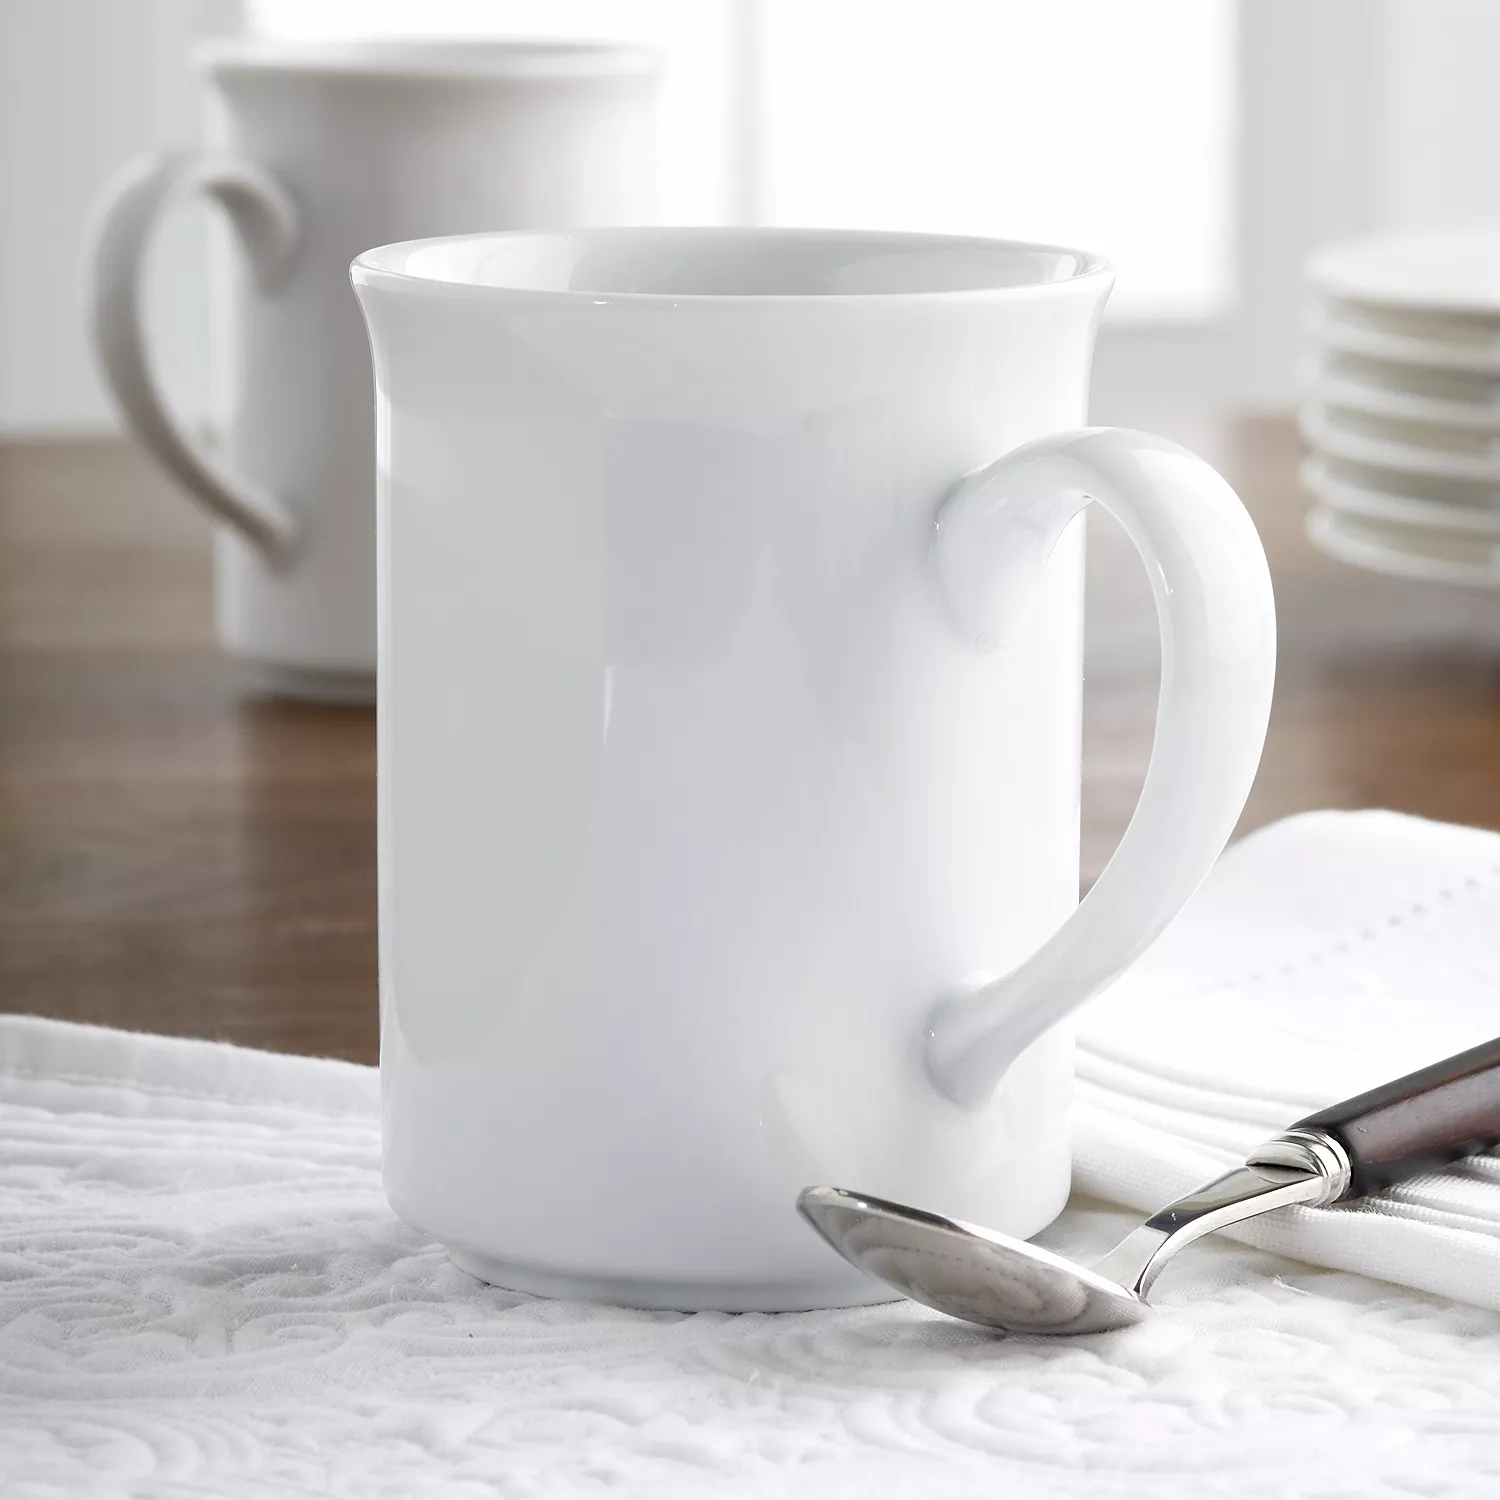 American Mug Pottery Ceramic Bistro Style Coffee Mug, Made in USA (14 oz -  Pack of 4, White)